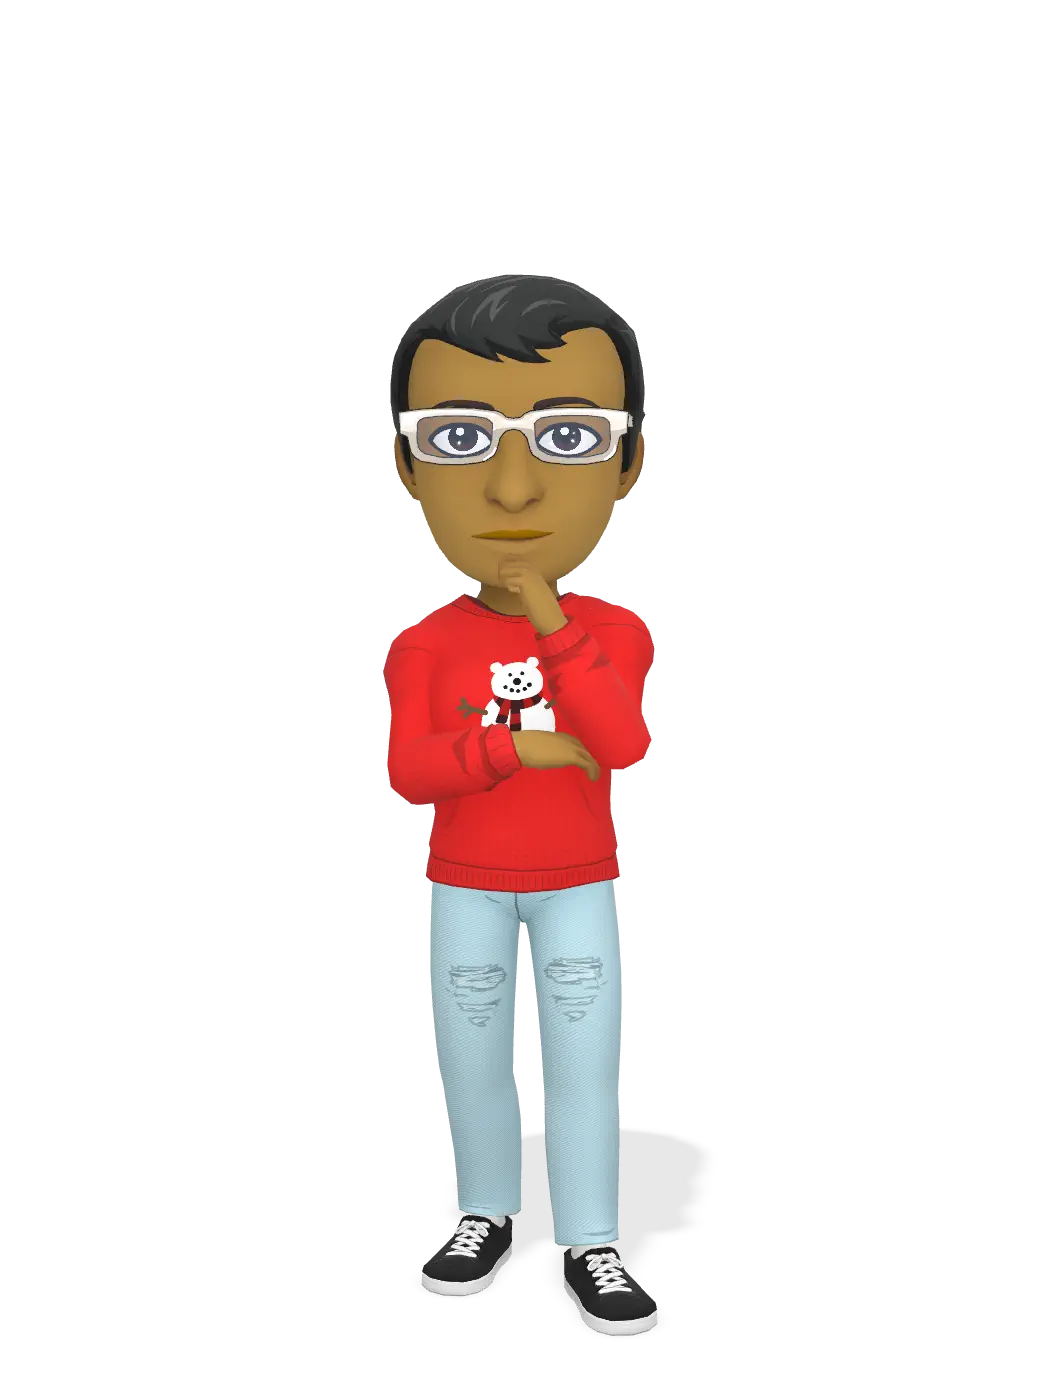 3D Bitmoji for alyami20155 avatar